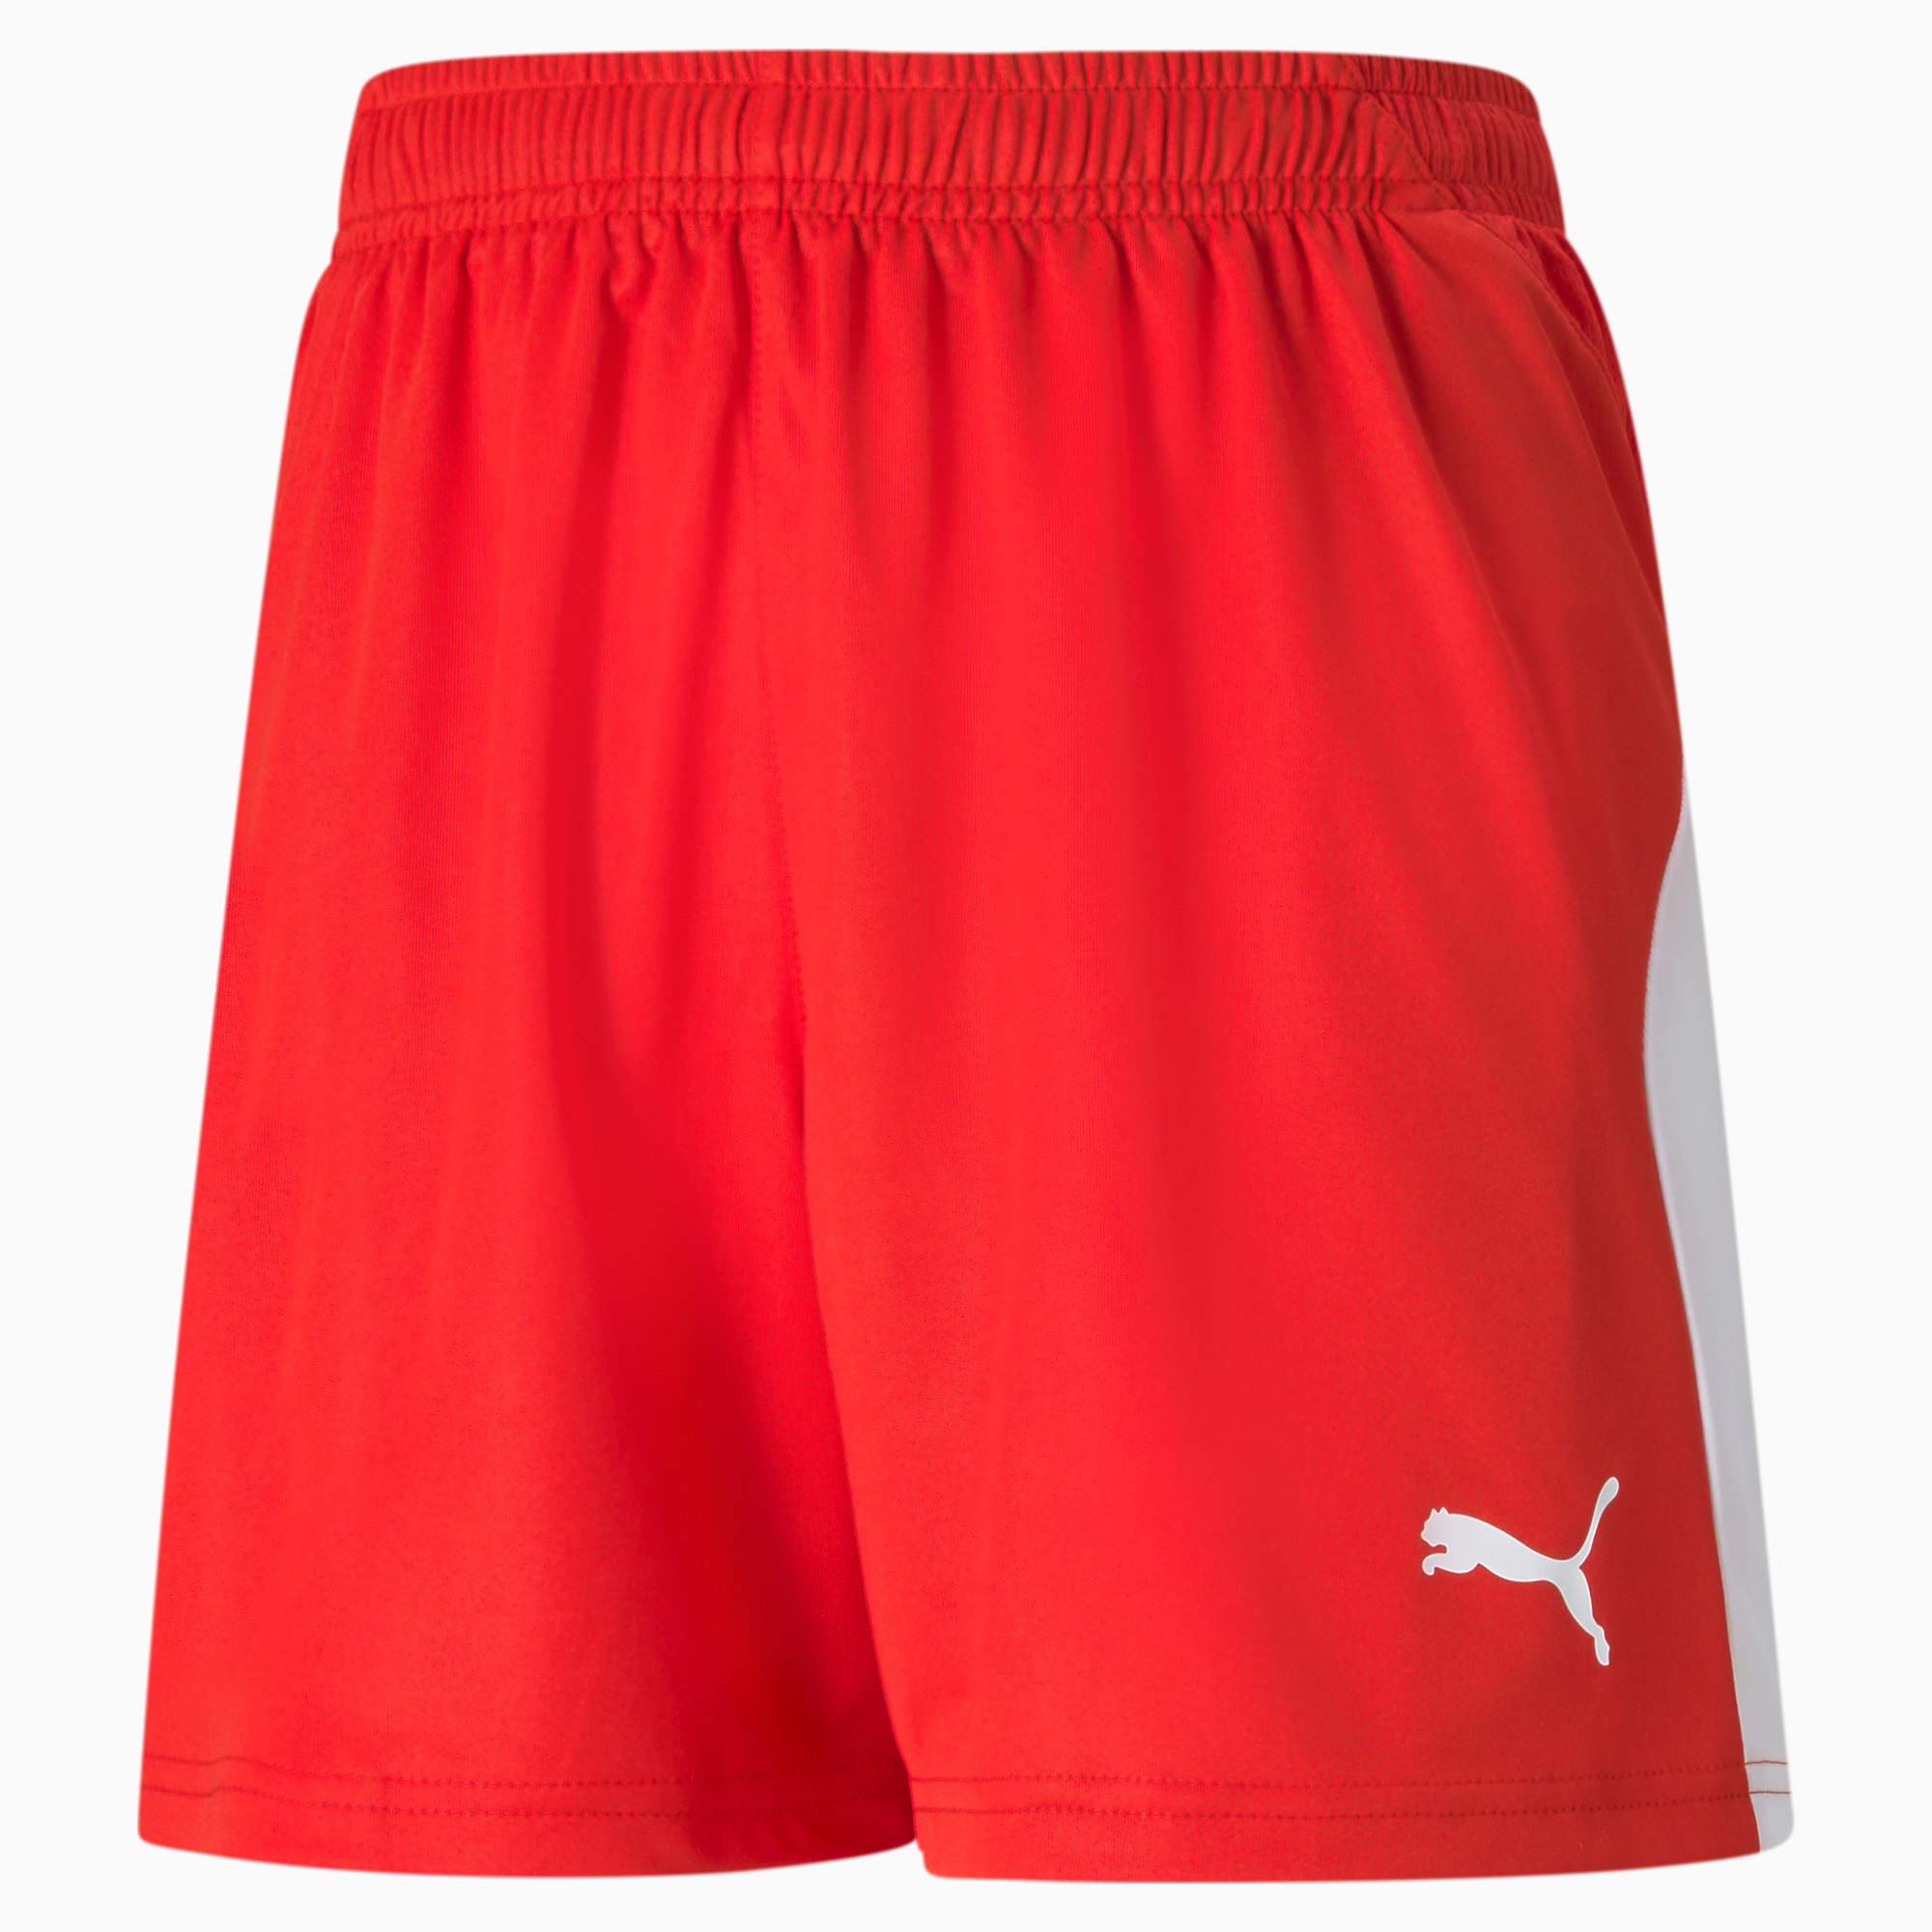 red puma shorts